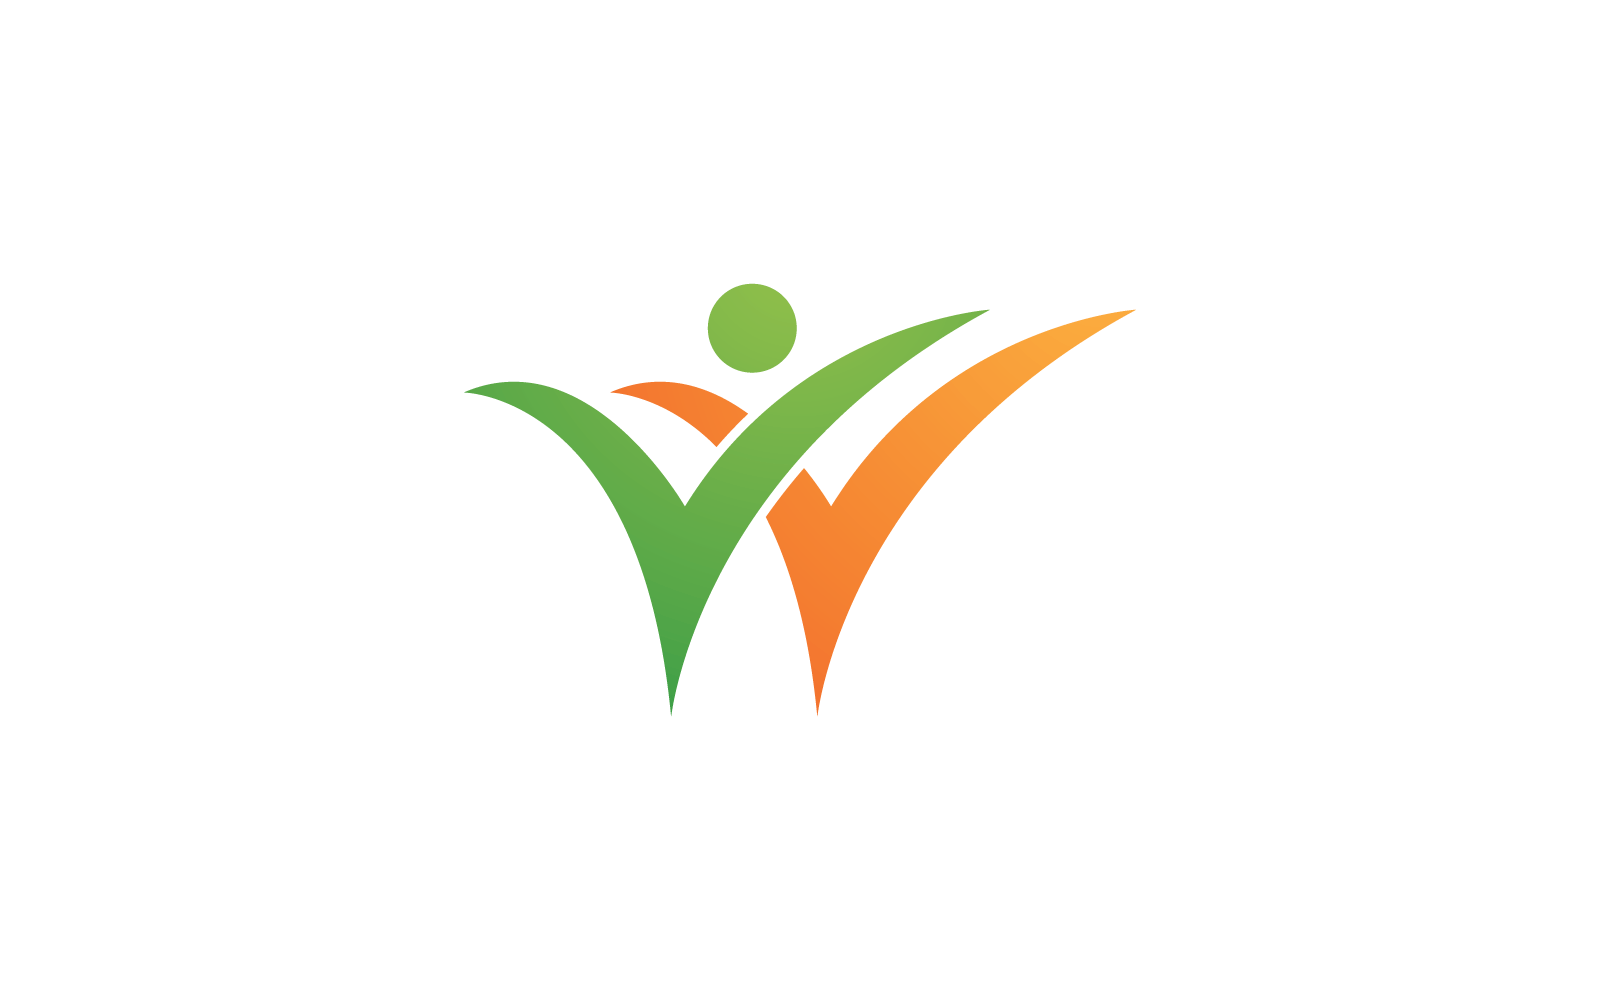 V W initial Community, network and social logo flat design Logo Template